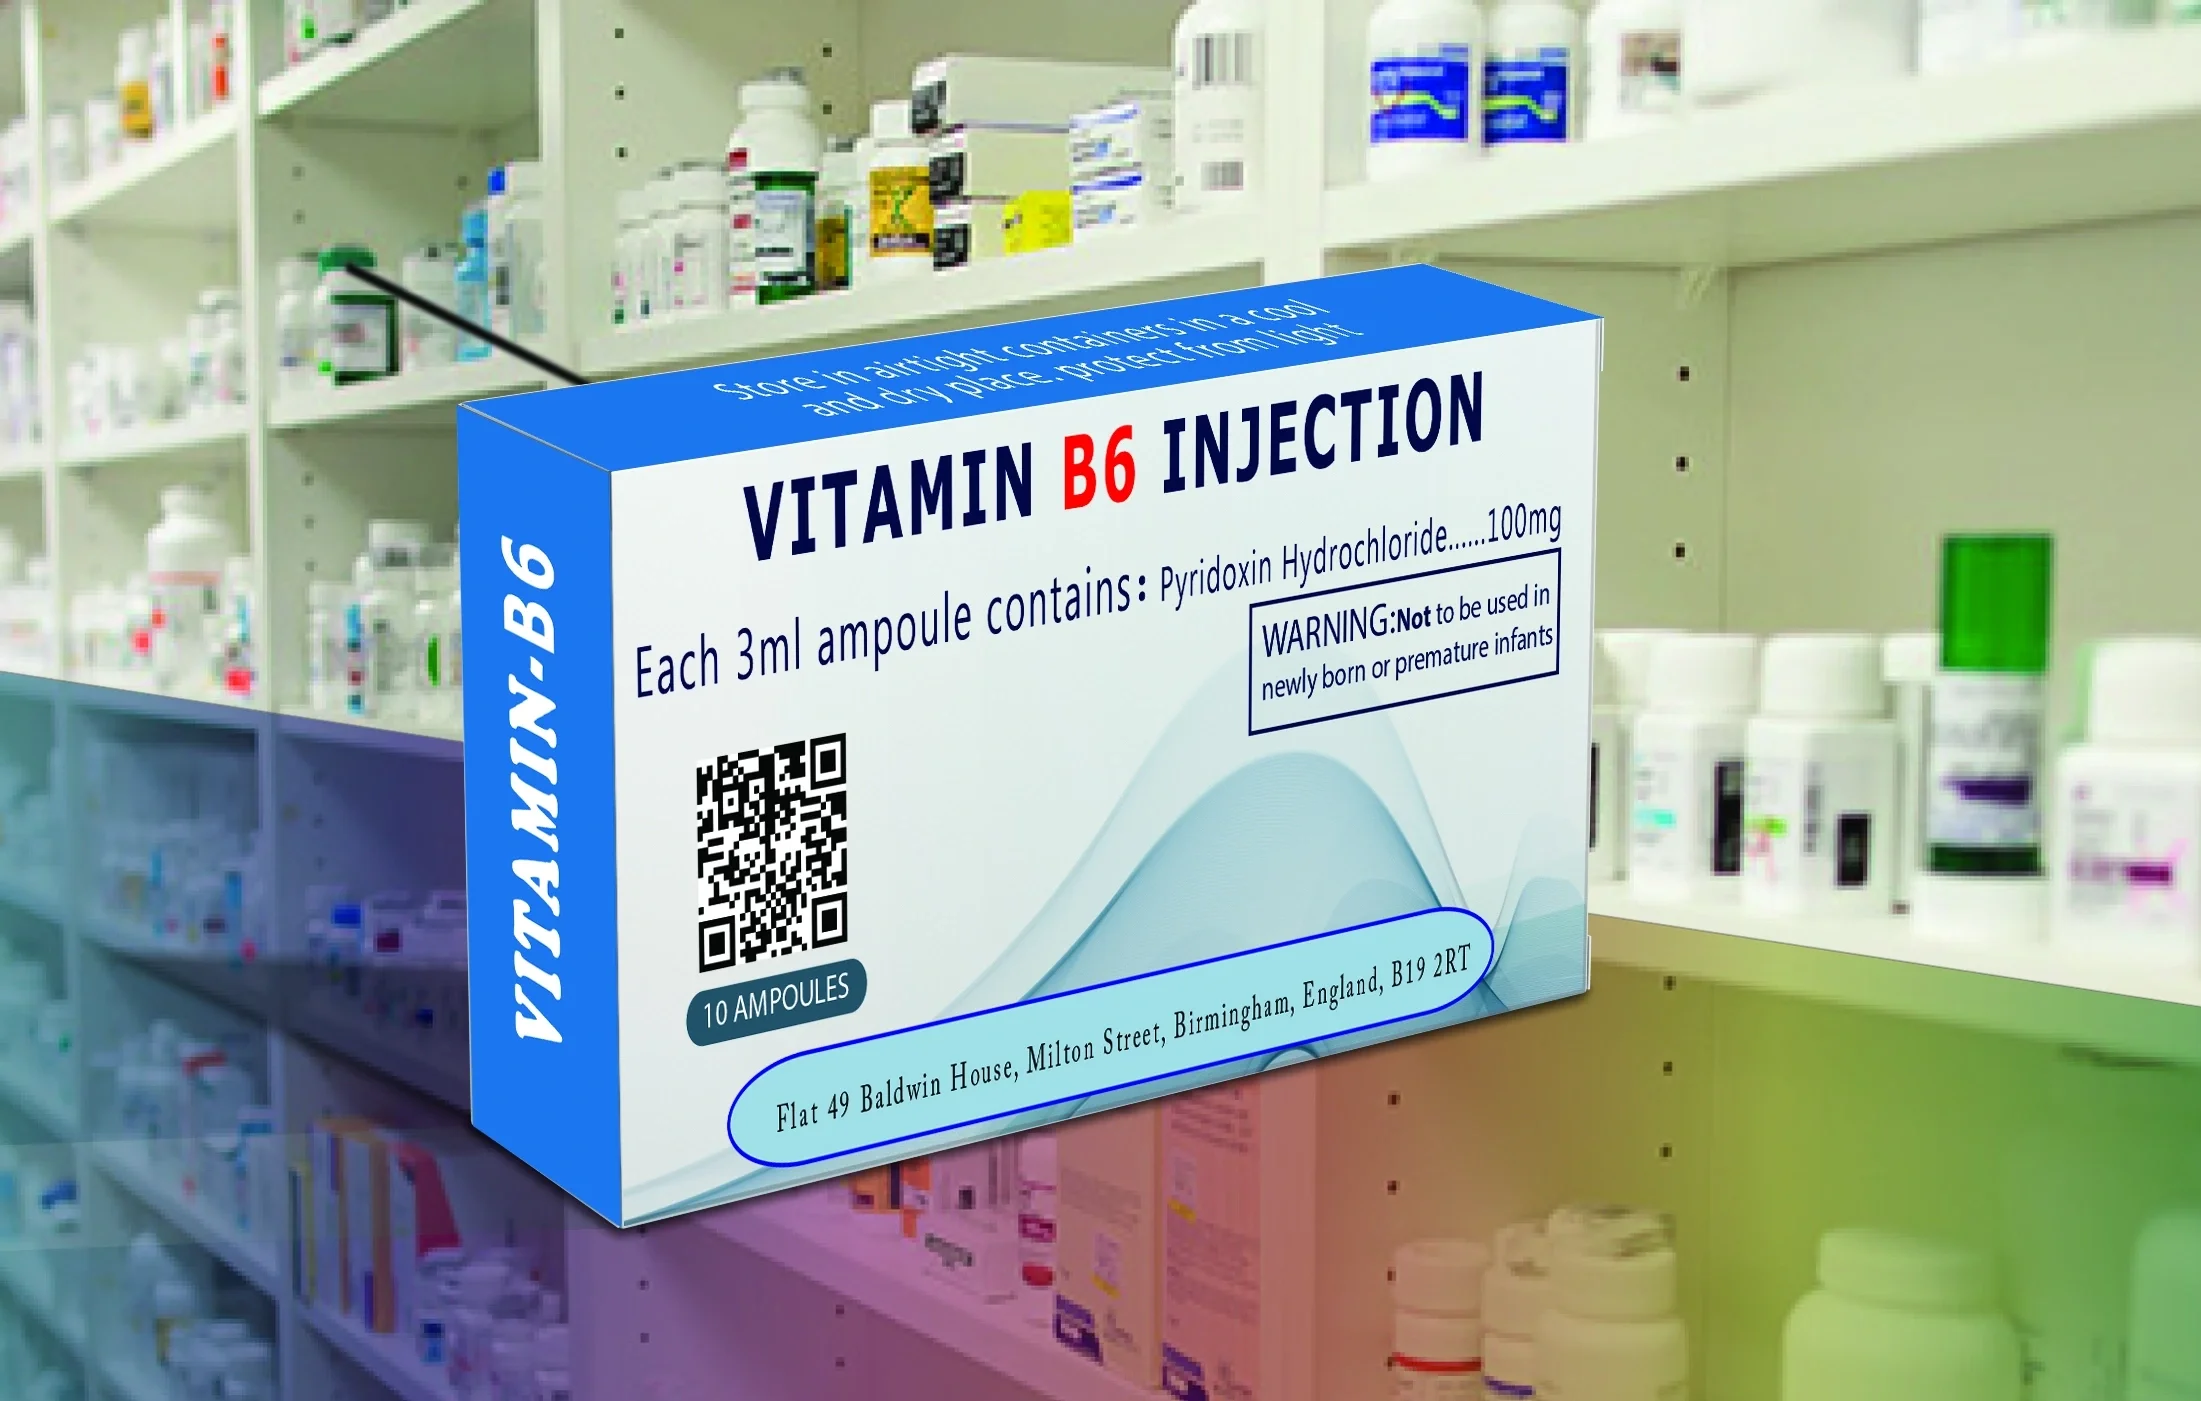 'Vitamin b6 injection', 'Vitamin b6 ampoule', 'Vitamine', 'Vitamin b6'